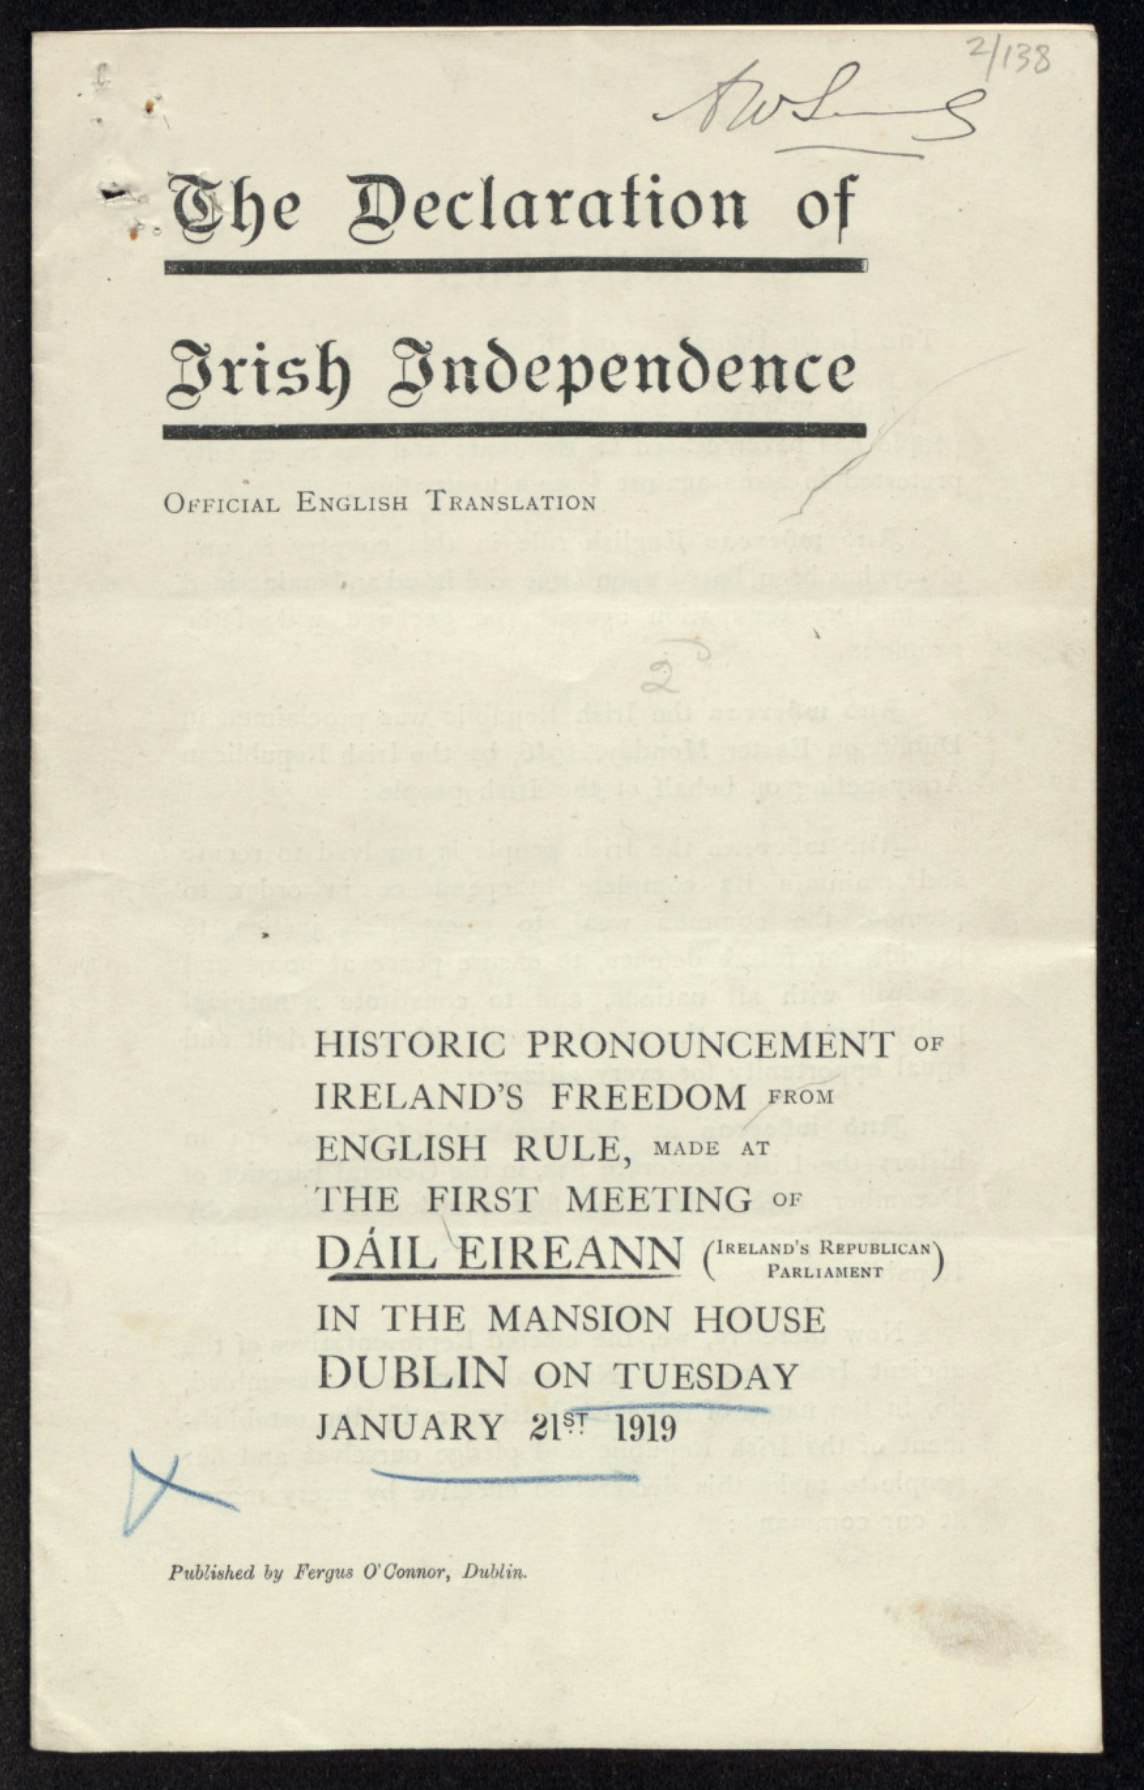 The Declaration of Irish Independence